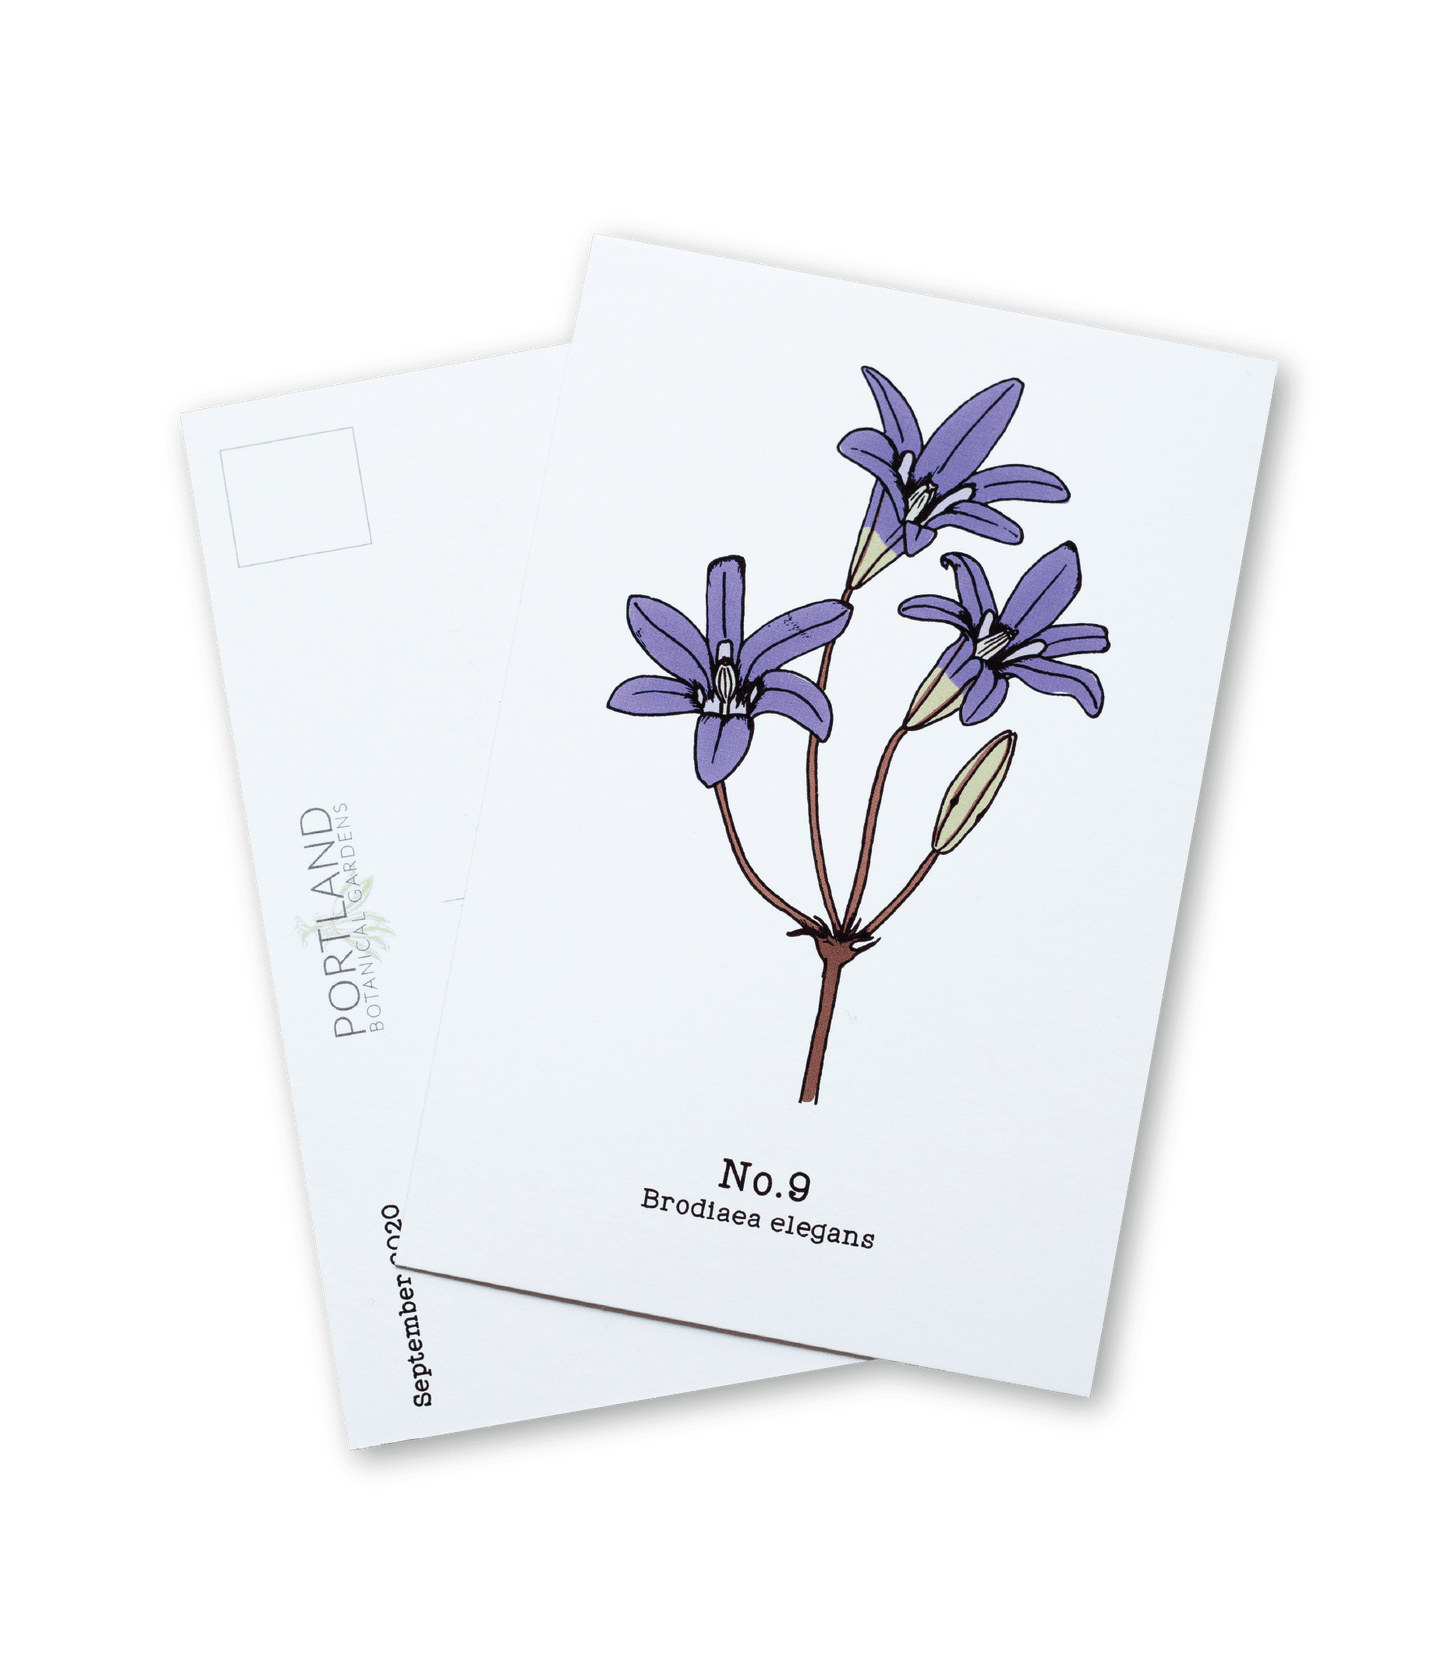 Oregon Native Plants (7-12) - 2020 Postcard Set of 6